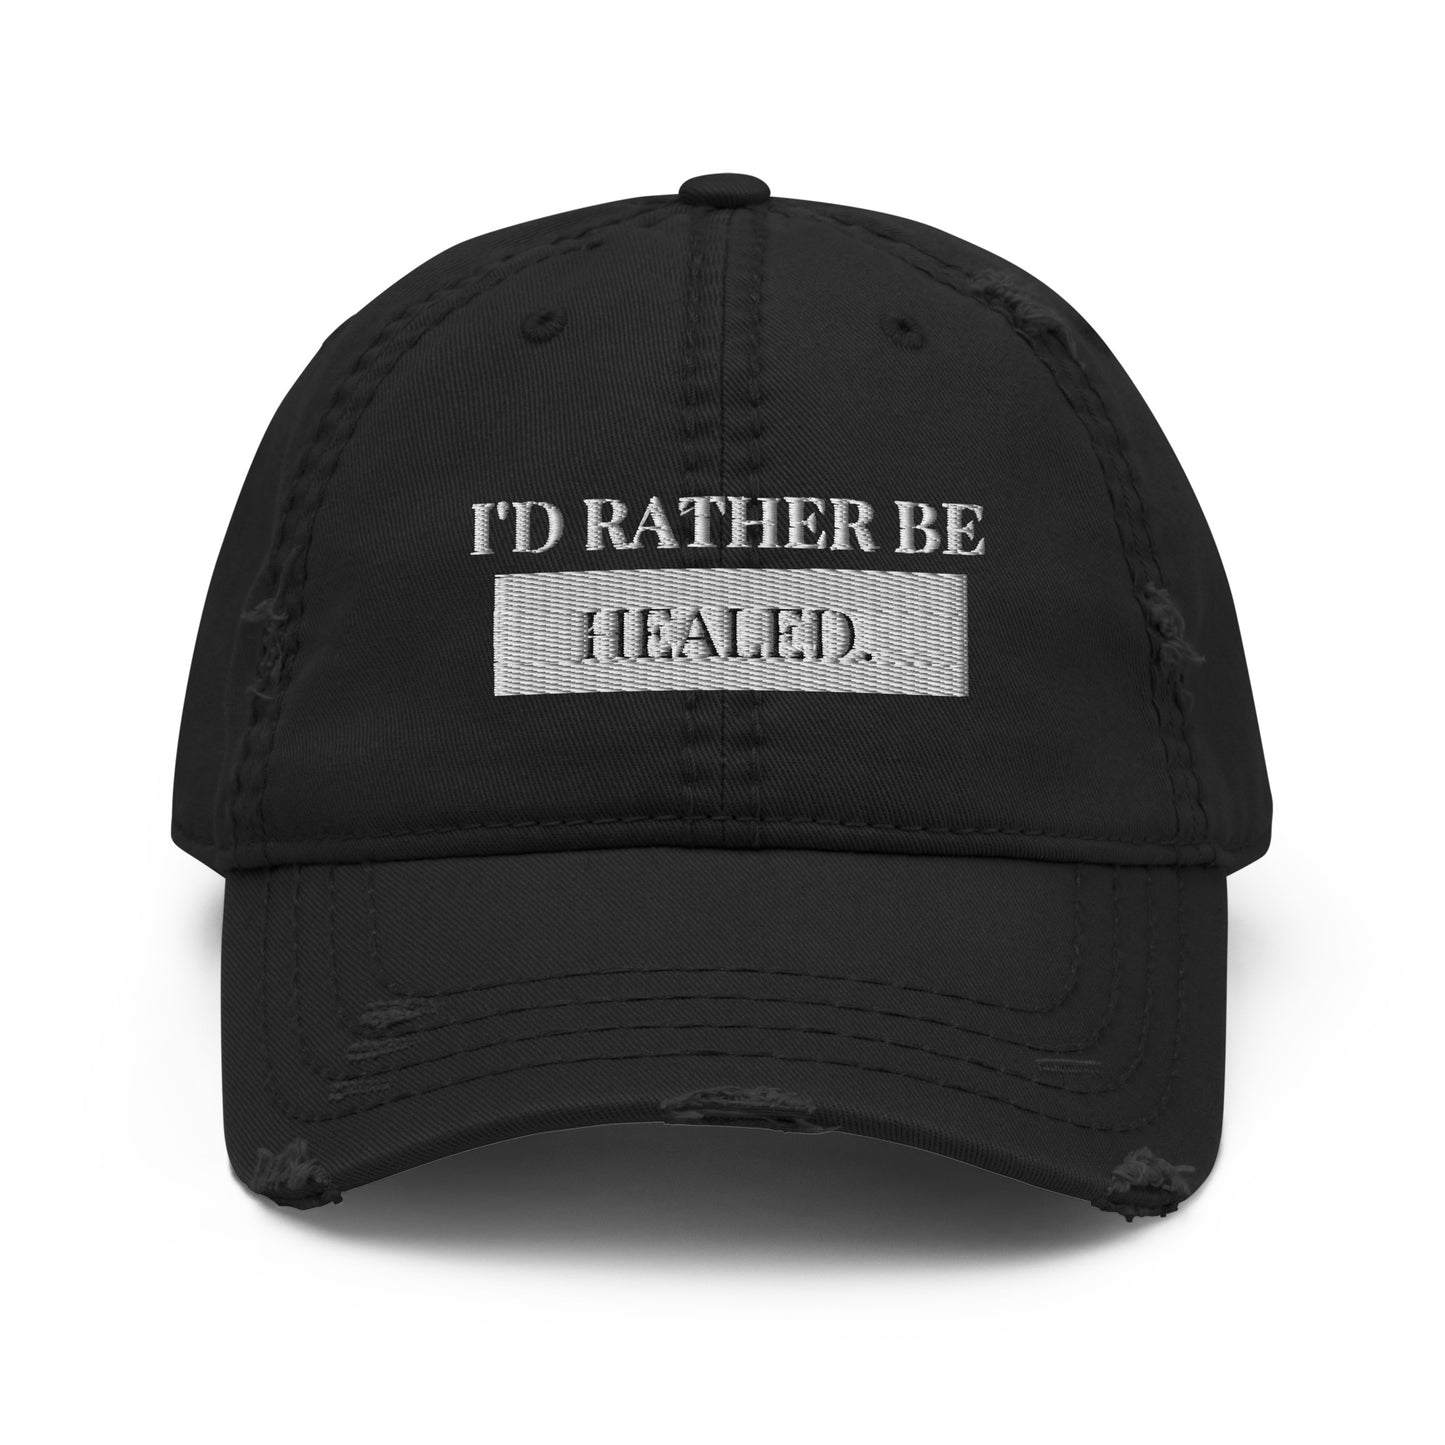 Healed Distressed Hat